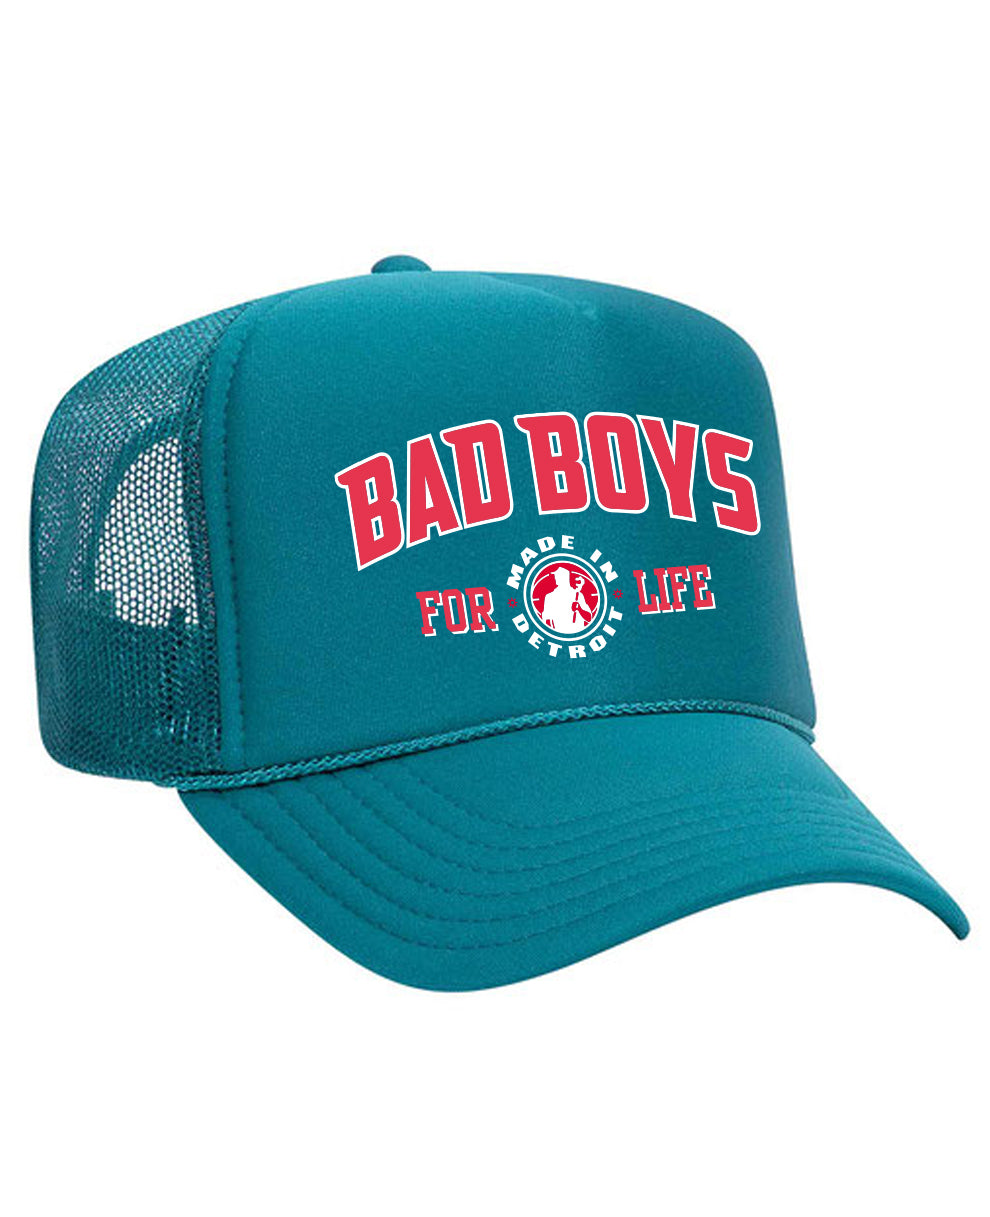 Bad Boys 4 Life Foam Trucker